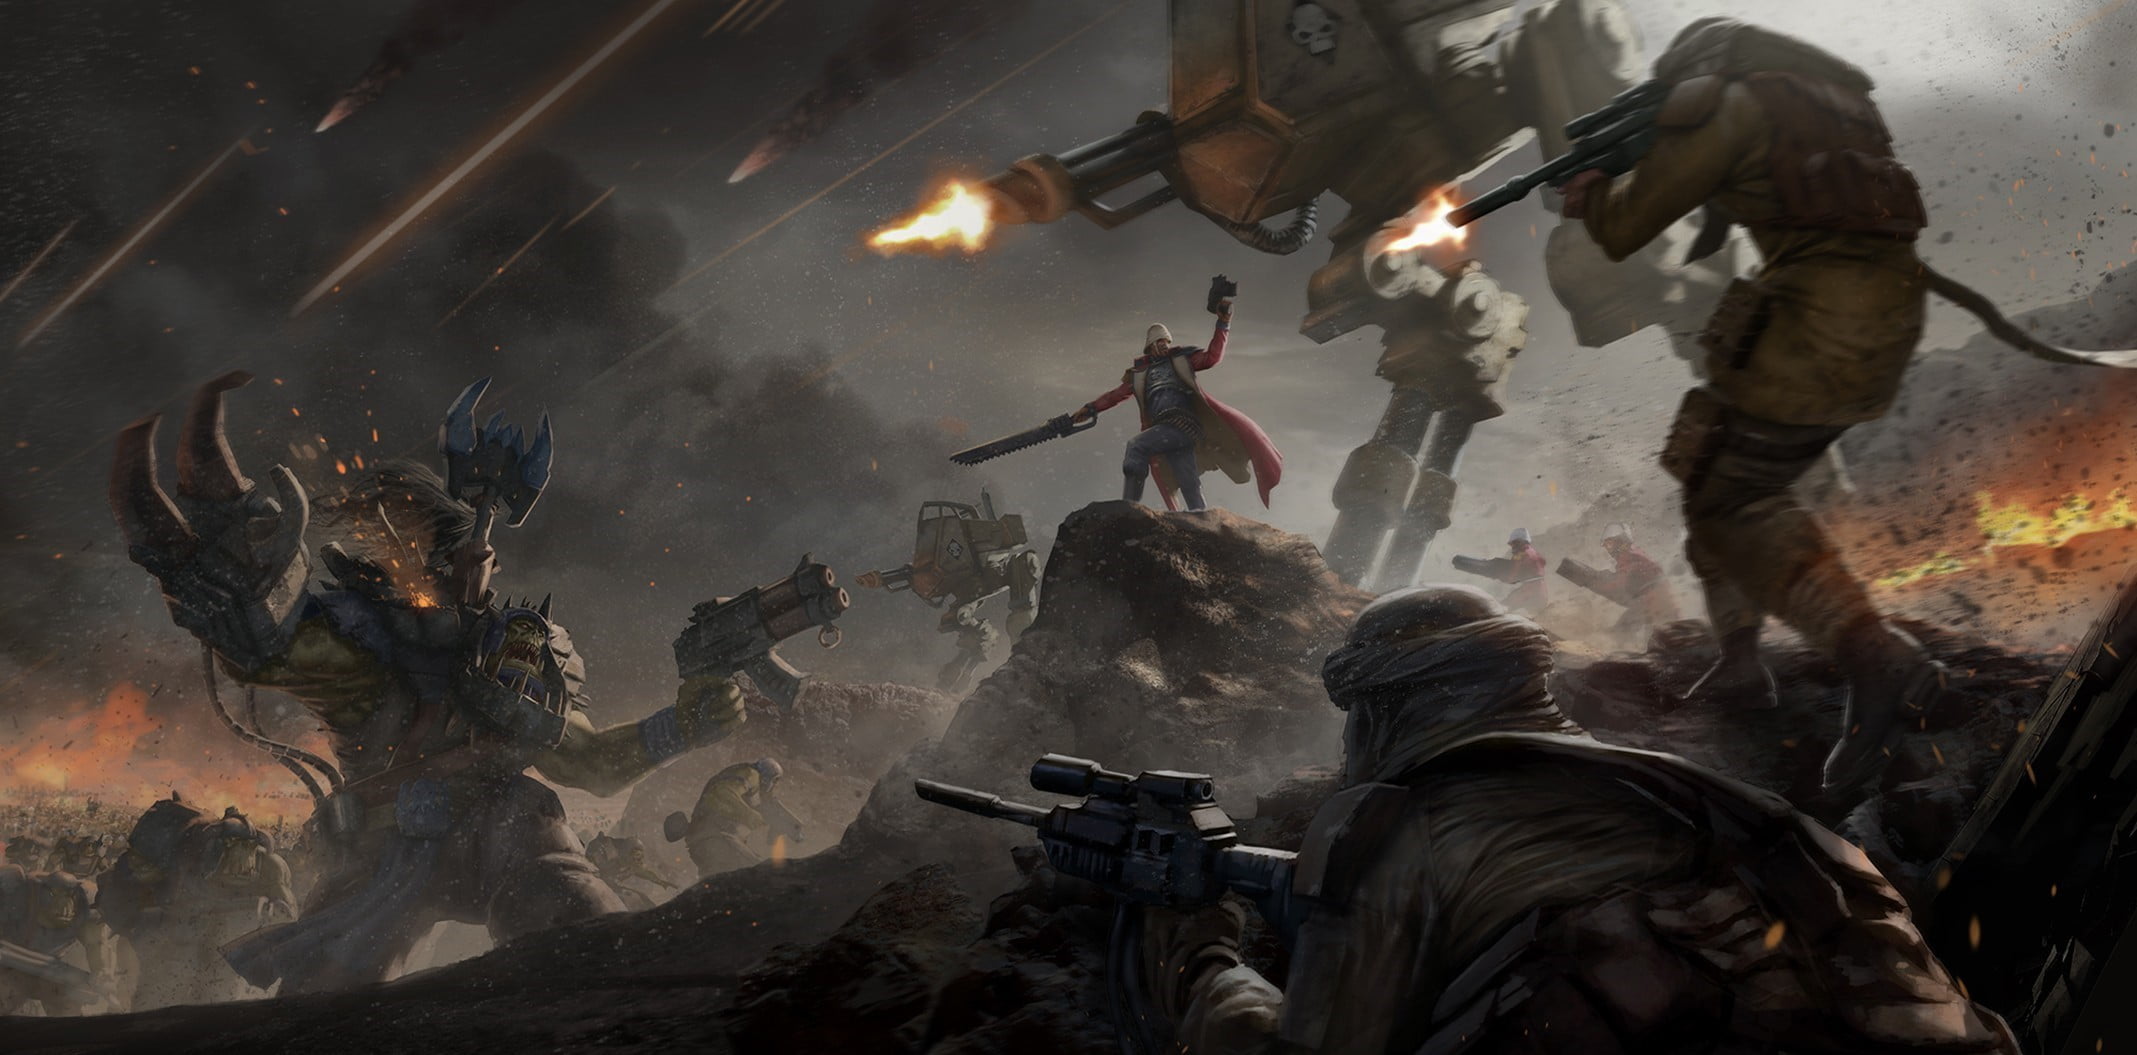 soldiers holding guns against monster illustration, fantasy art, battle, artwork, Warhammer 40,000